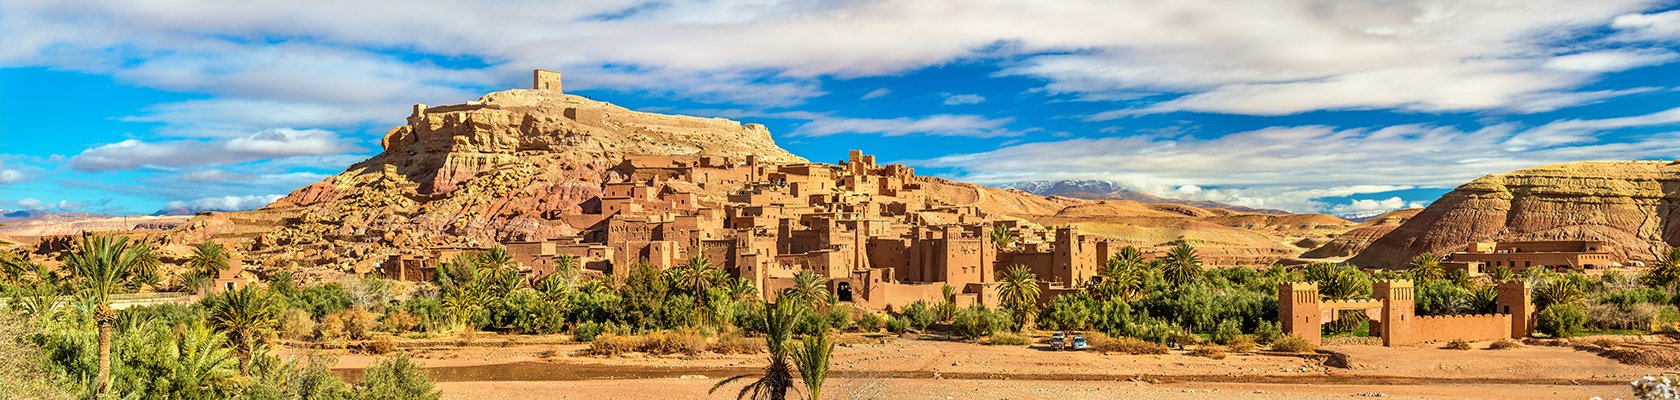 Rondreis Marokko